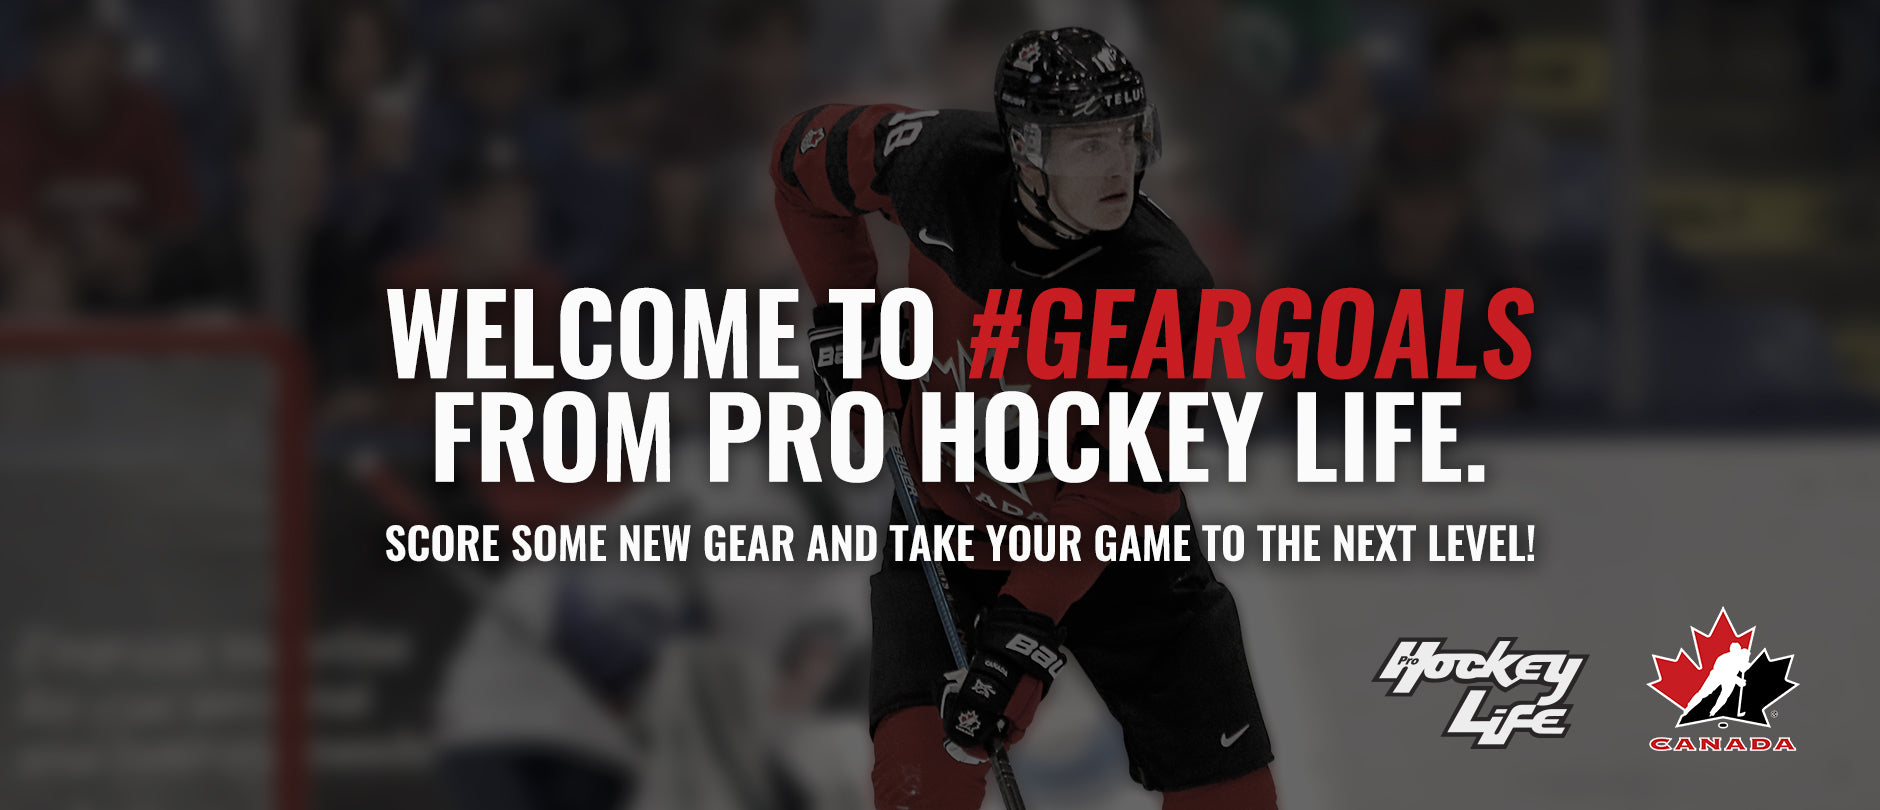 Team Canada #GearGoals Pro Hockey Life